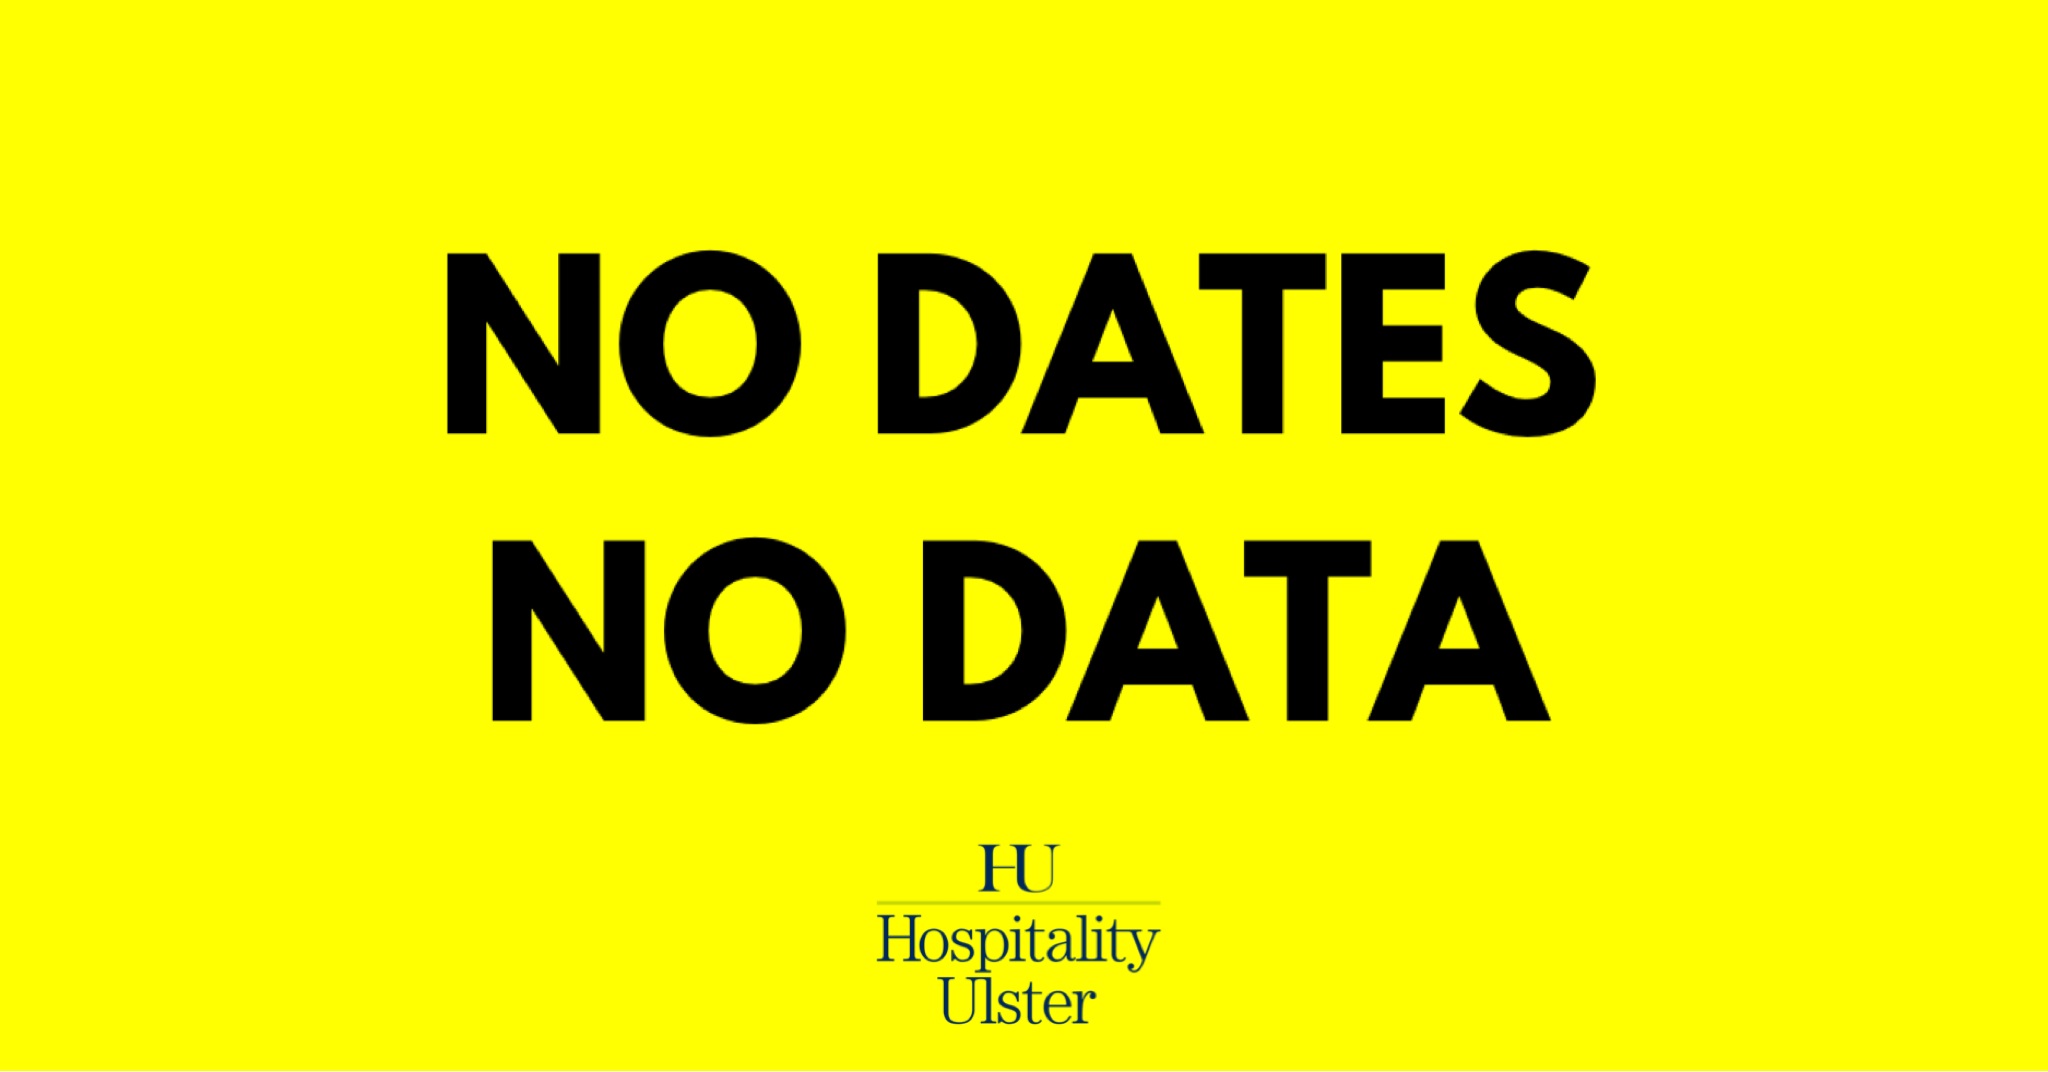 NO DATES - NO DATA